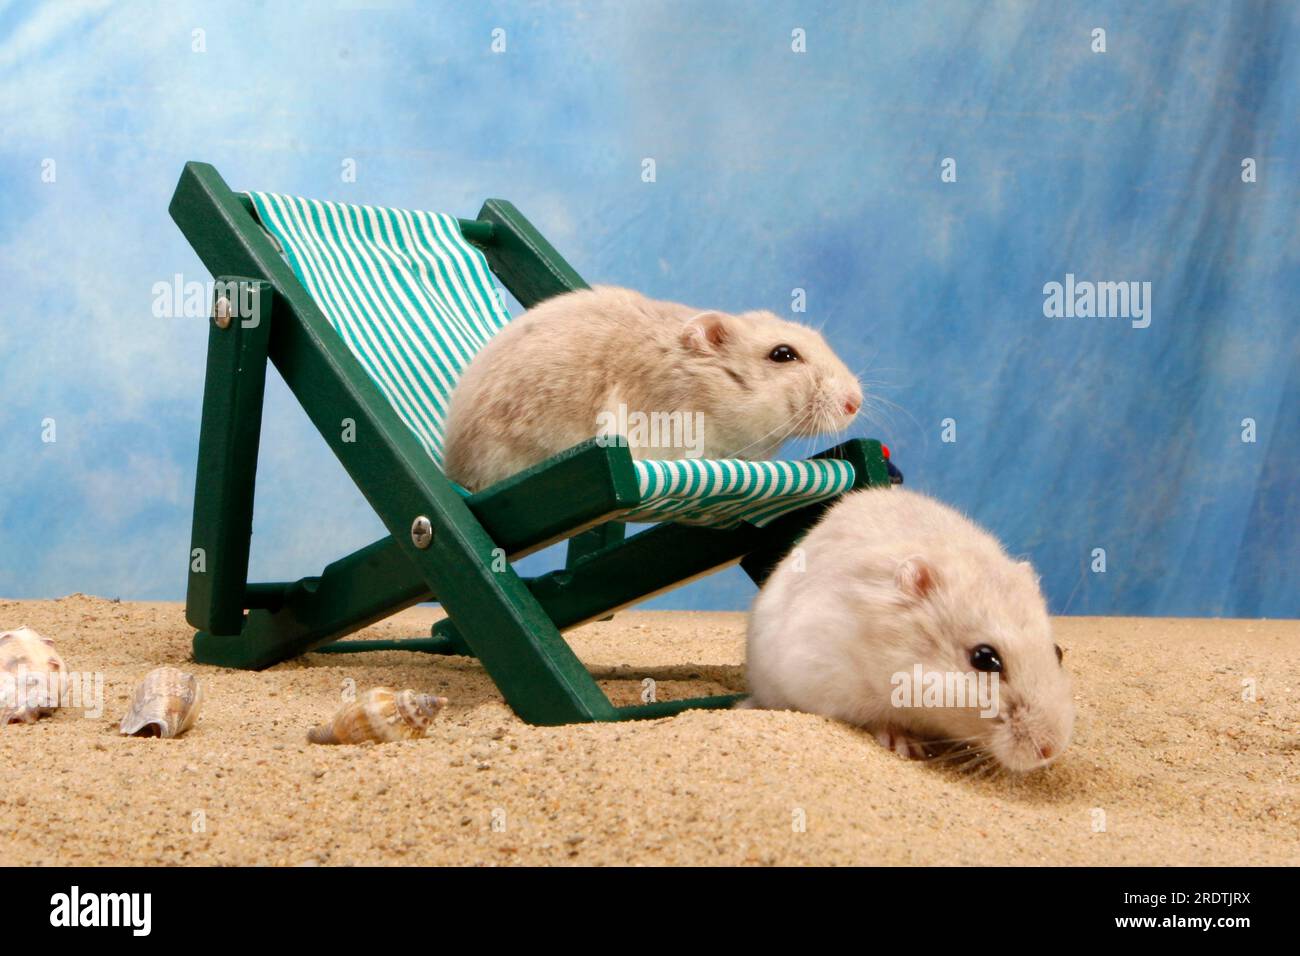 Roborovski dwarf hamster (Phodopus roborovskii) on deck chair Stock Photo